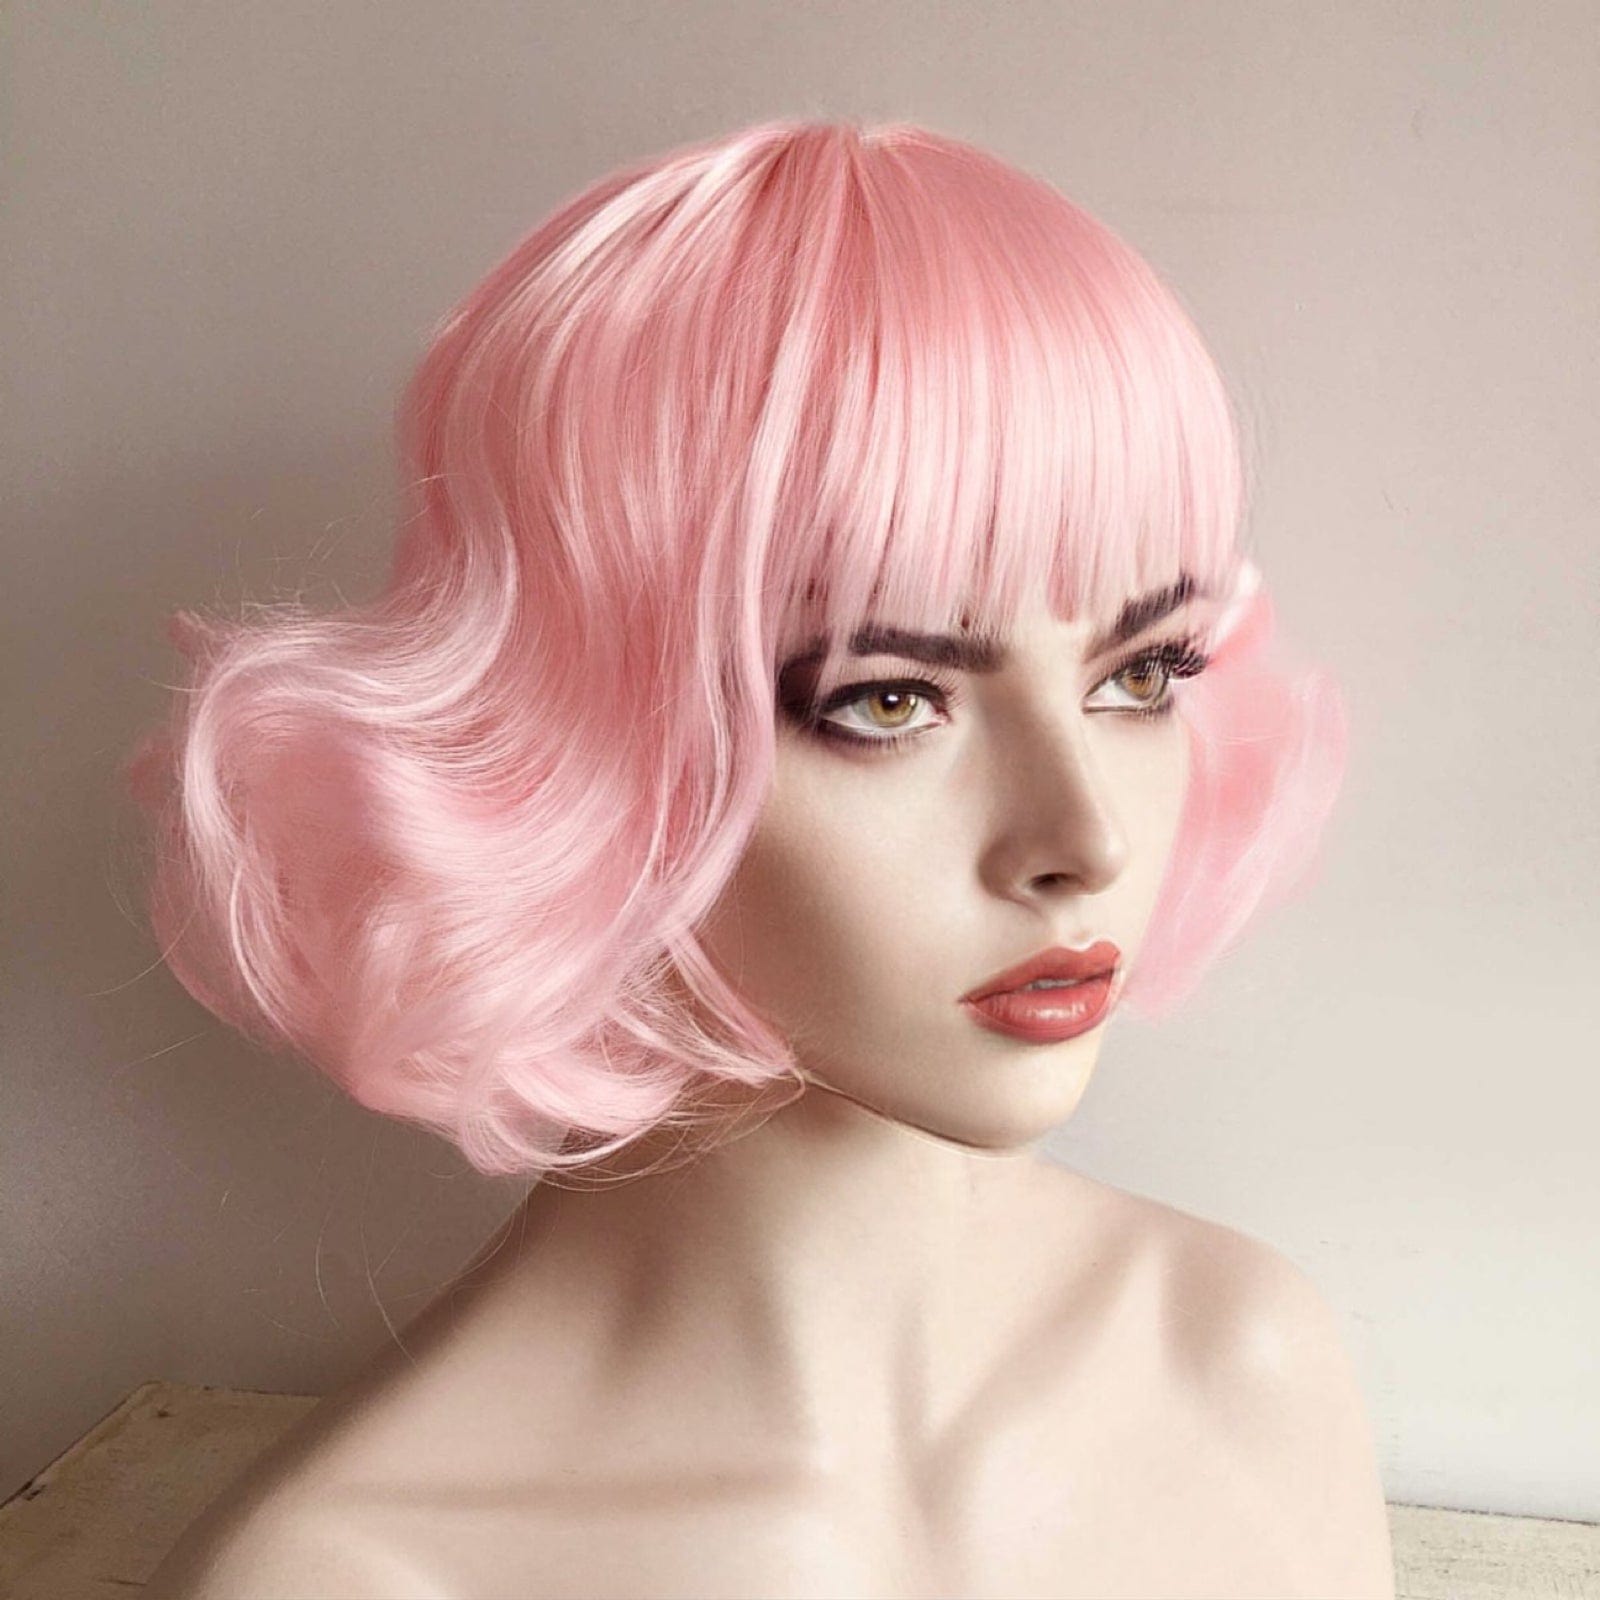 nevermindyrhead Women Pink Short Curly Fringe Bangs Lolita Wig